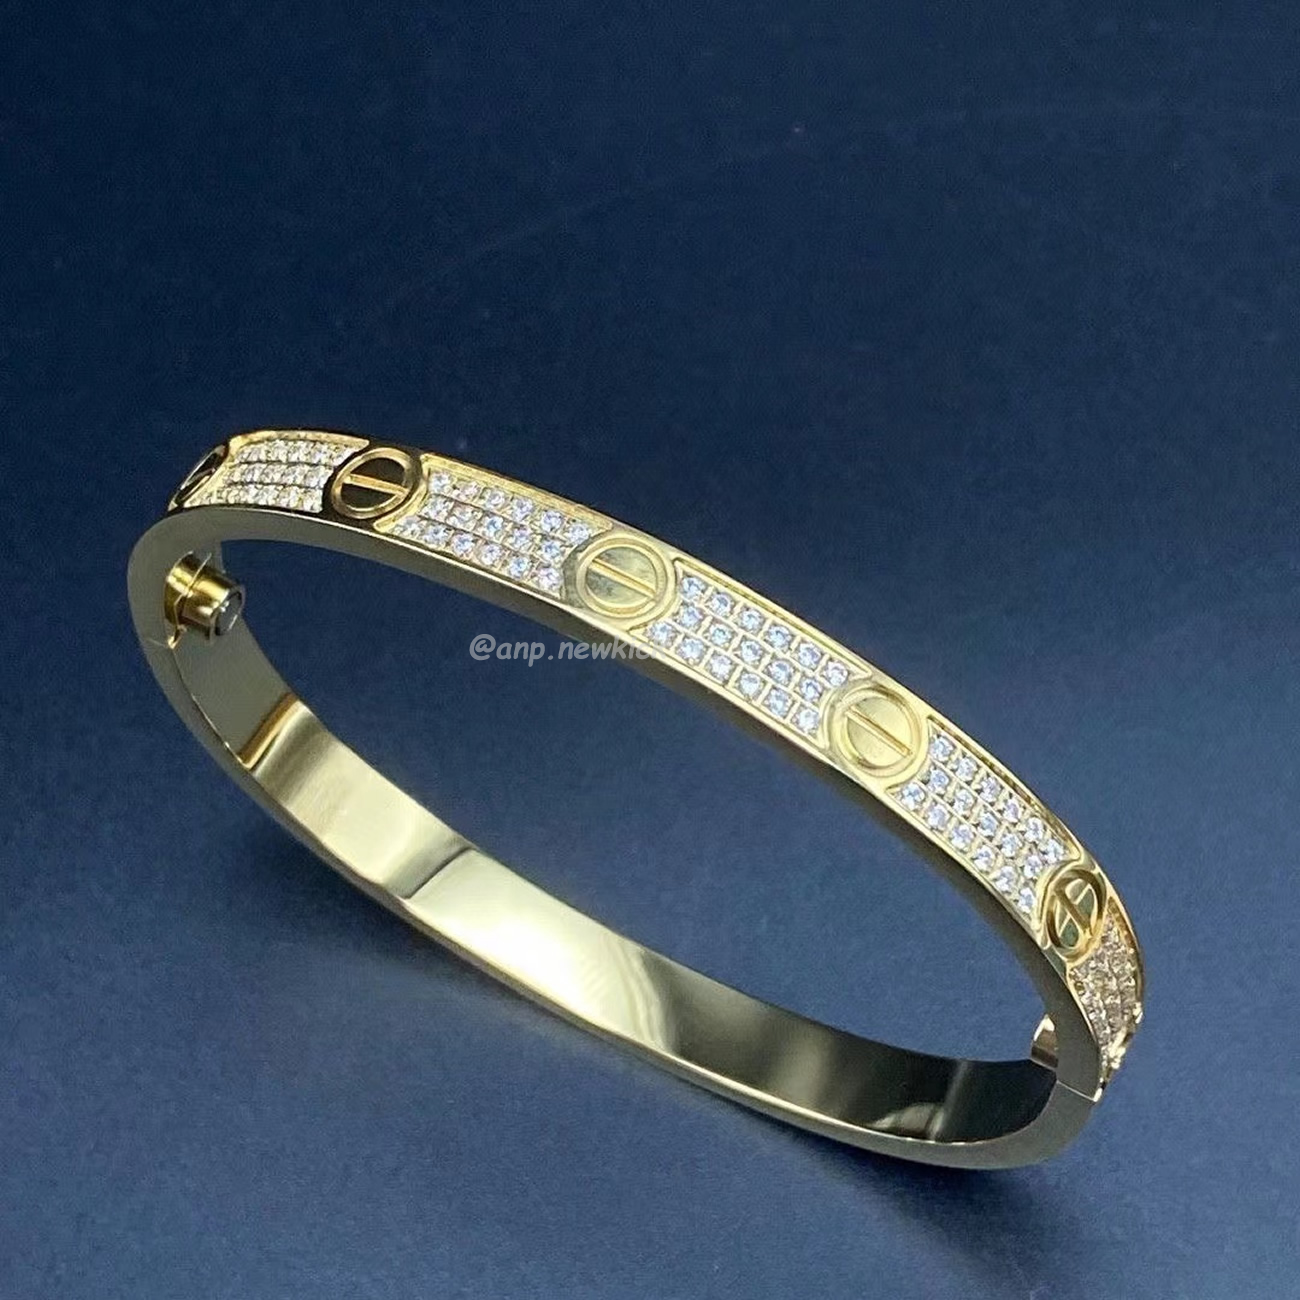 Cartier Bracelet Wide Version Full Sky Star Gold Rose Gold Platinum (2) - newkick.org